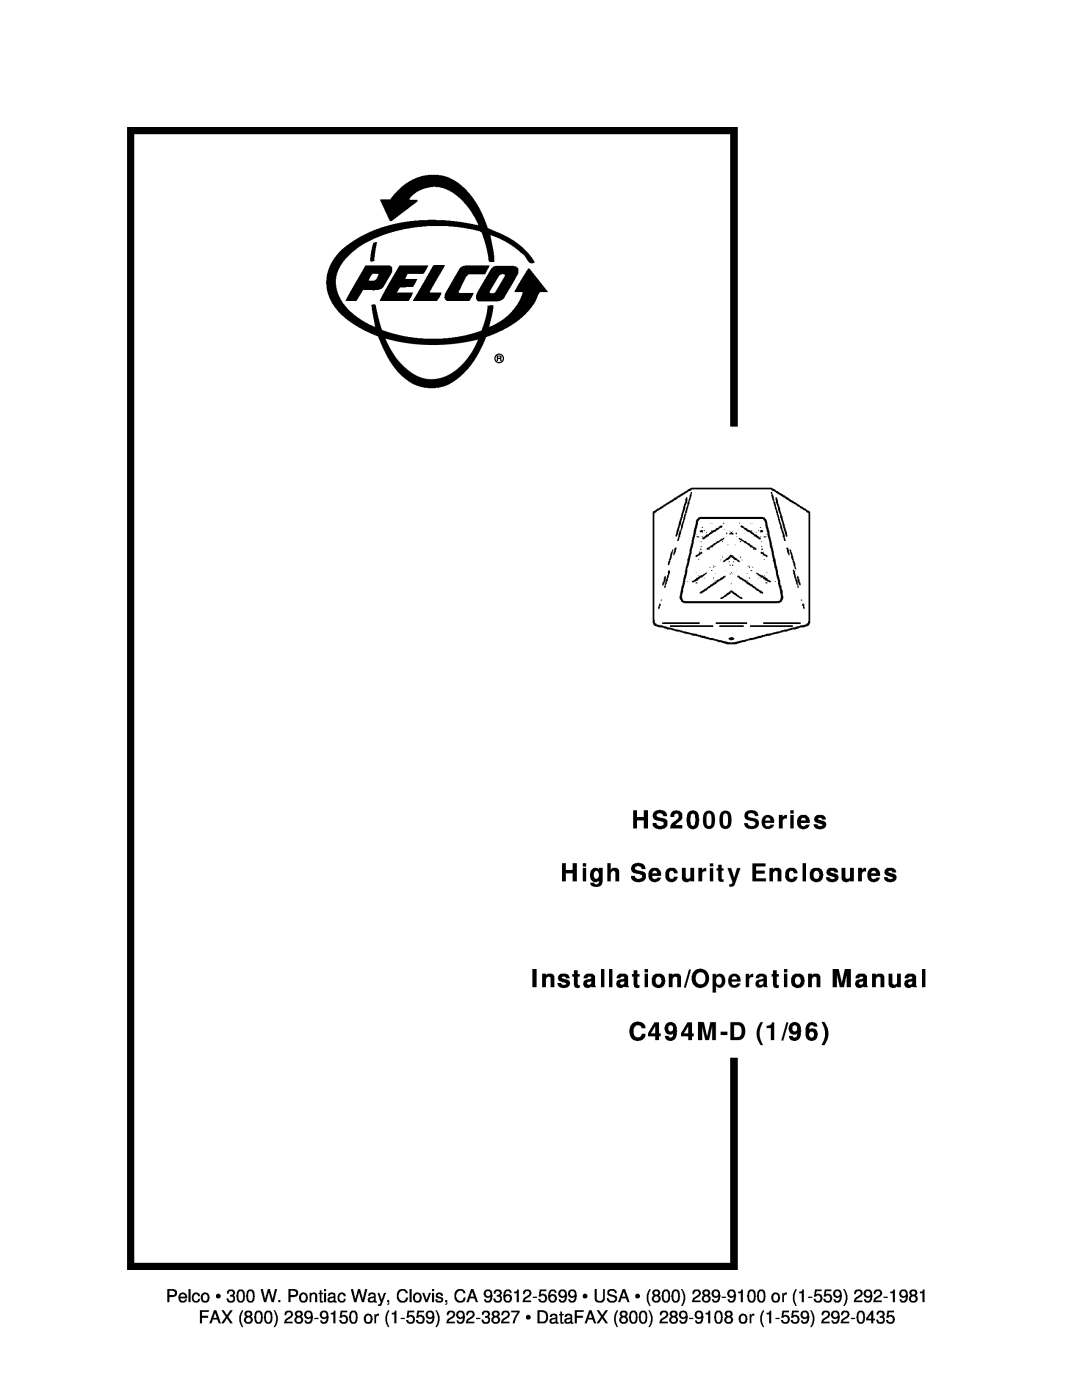 Pelco operation manual HS2000 Series, High Security Enclosures, C494M-D1/96 